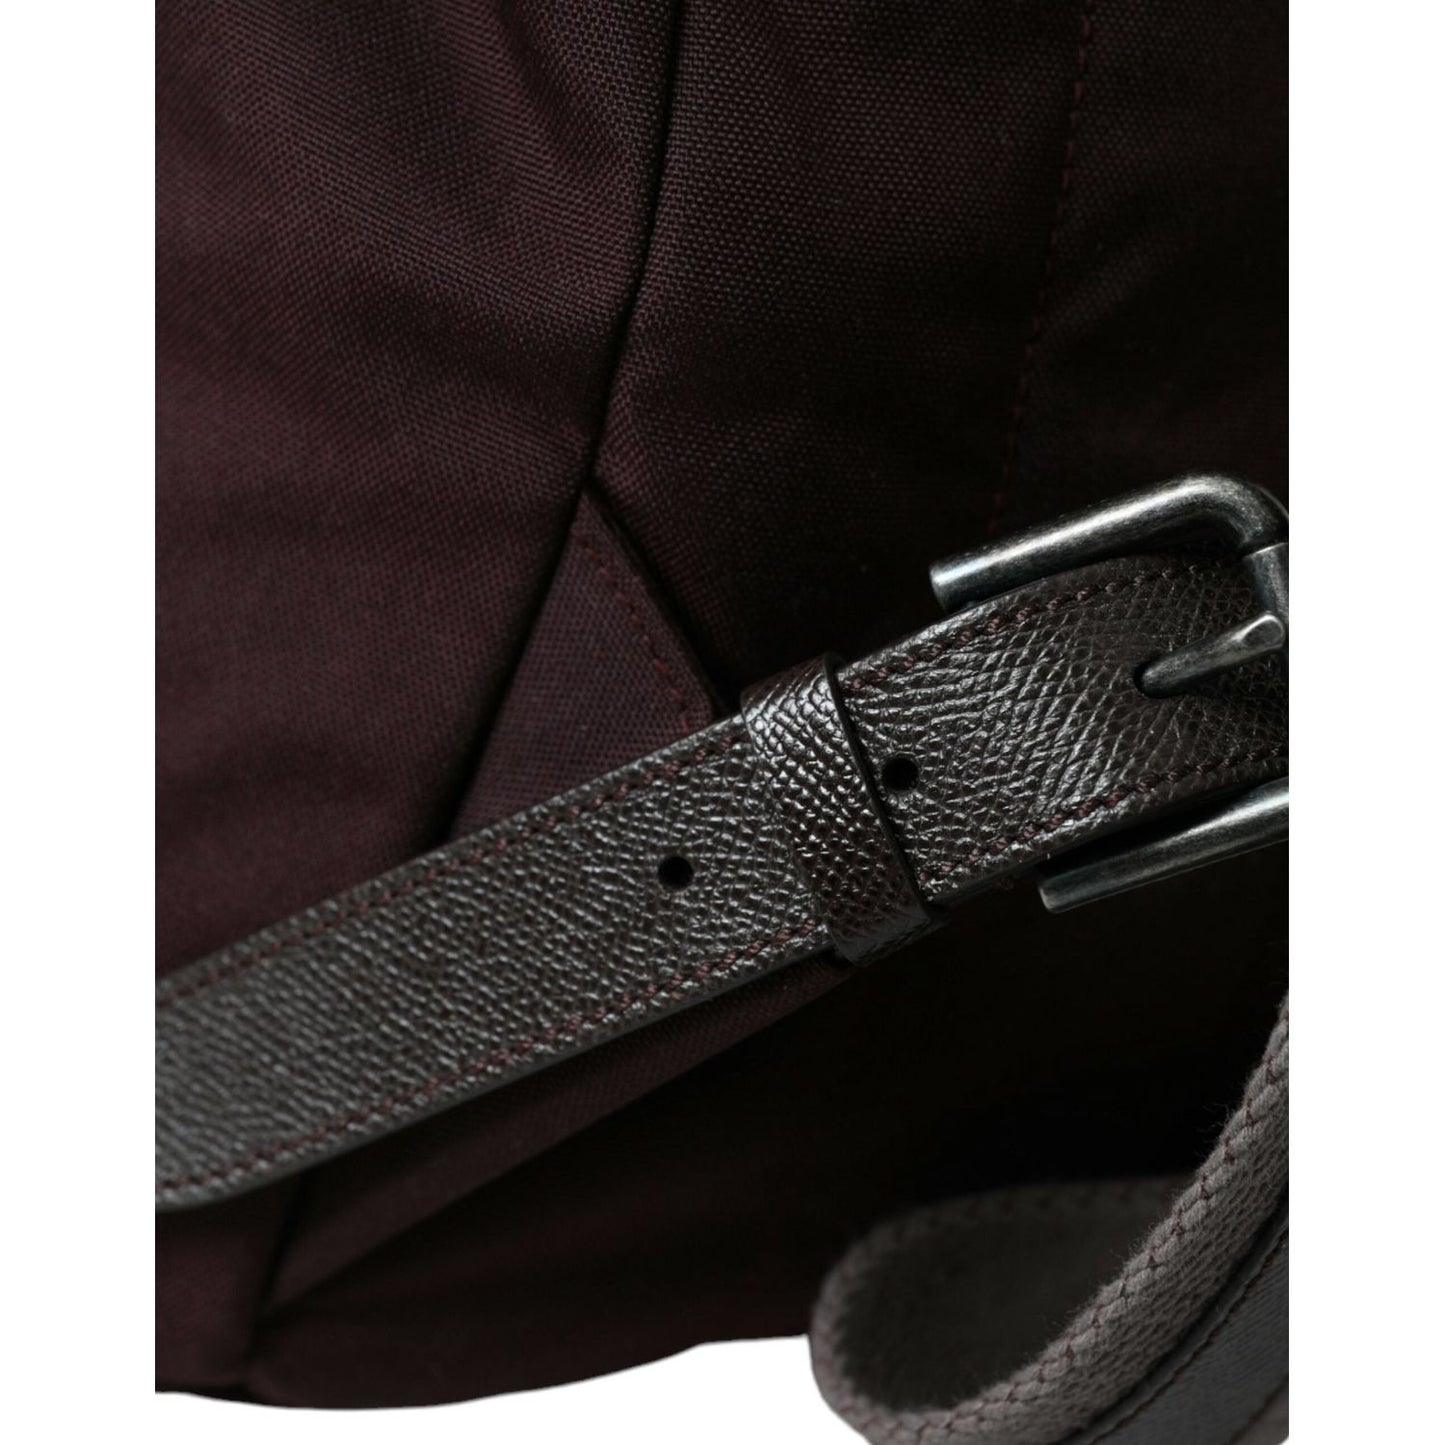 Dolce & Gabbana Elegant Maroon Nylon Leather Backpack elegant-maroon-nylon-leather-backpack